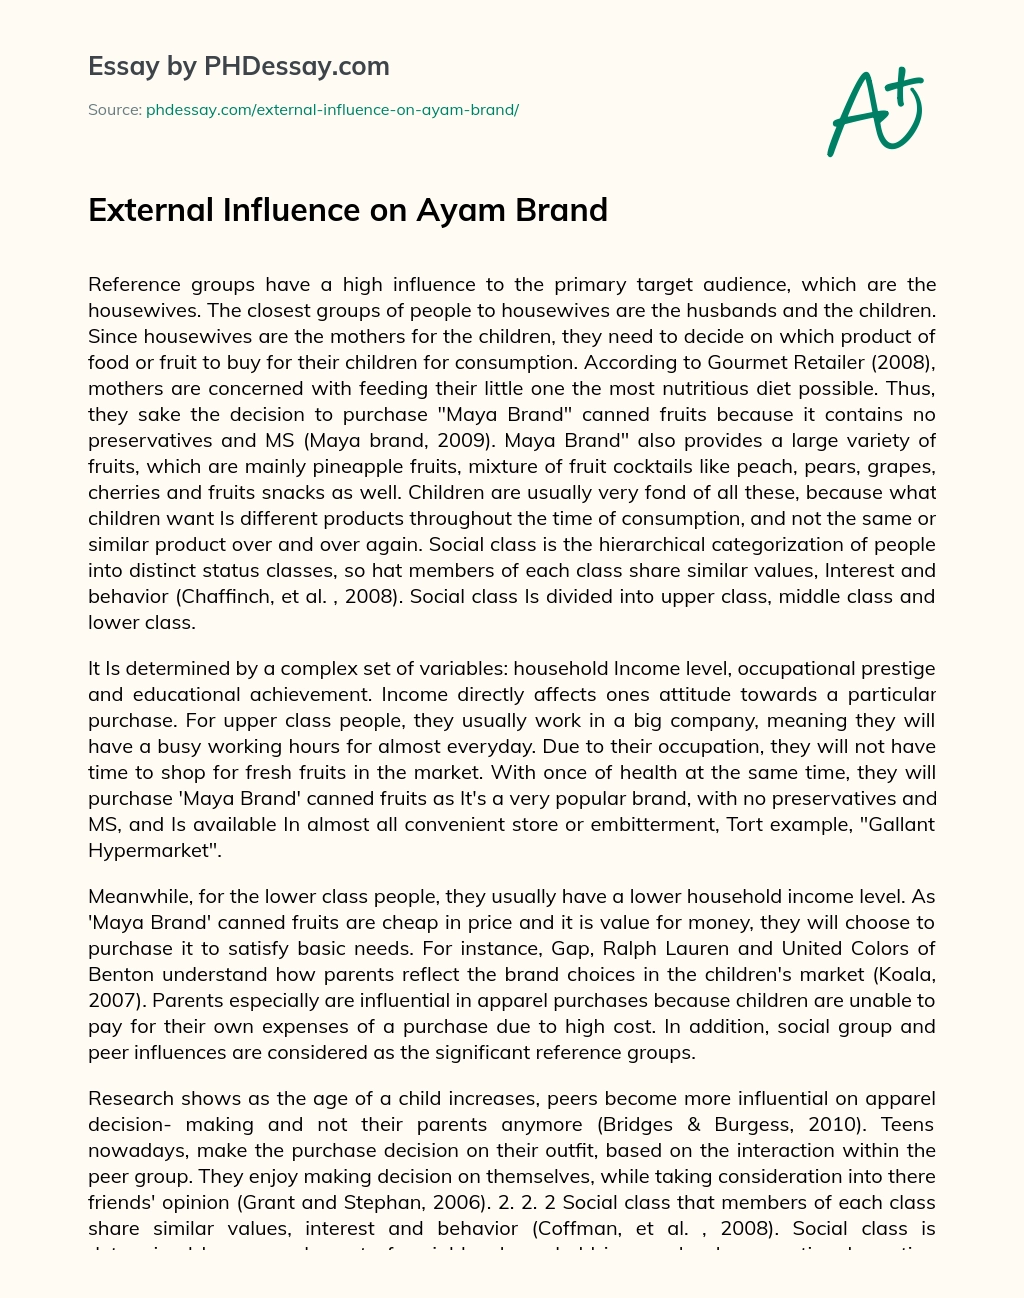 External Influence on Ayam Brand essay